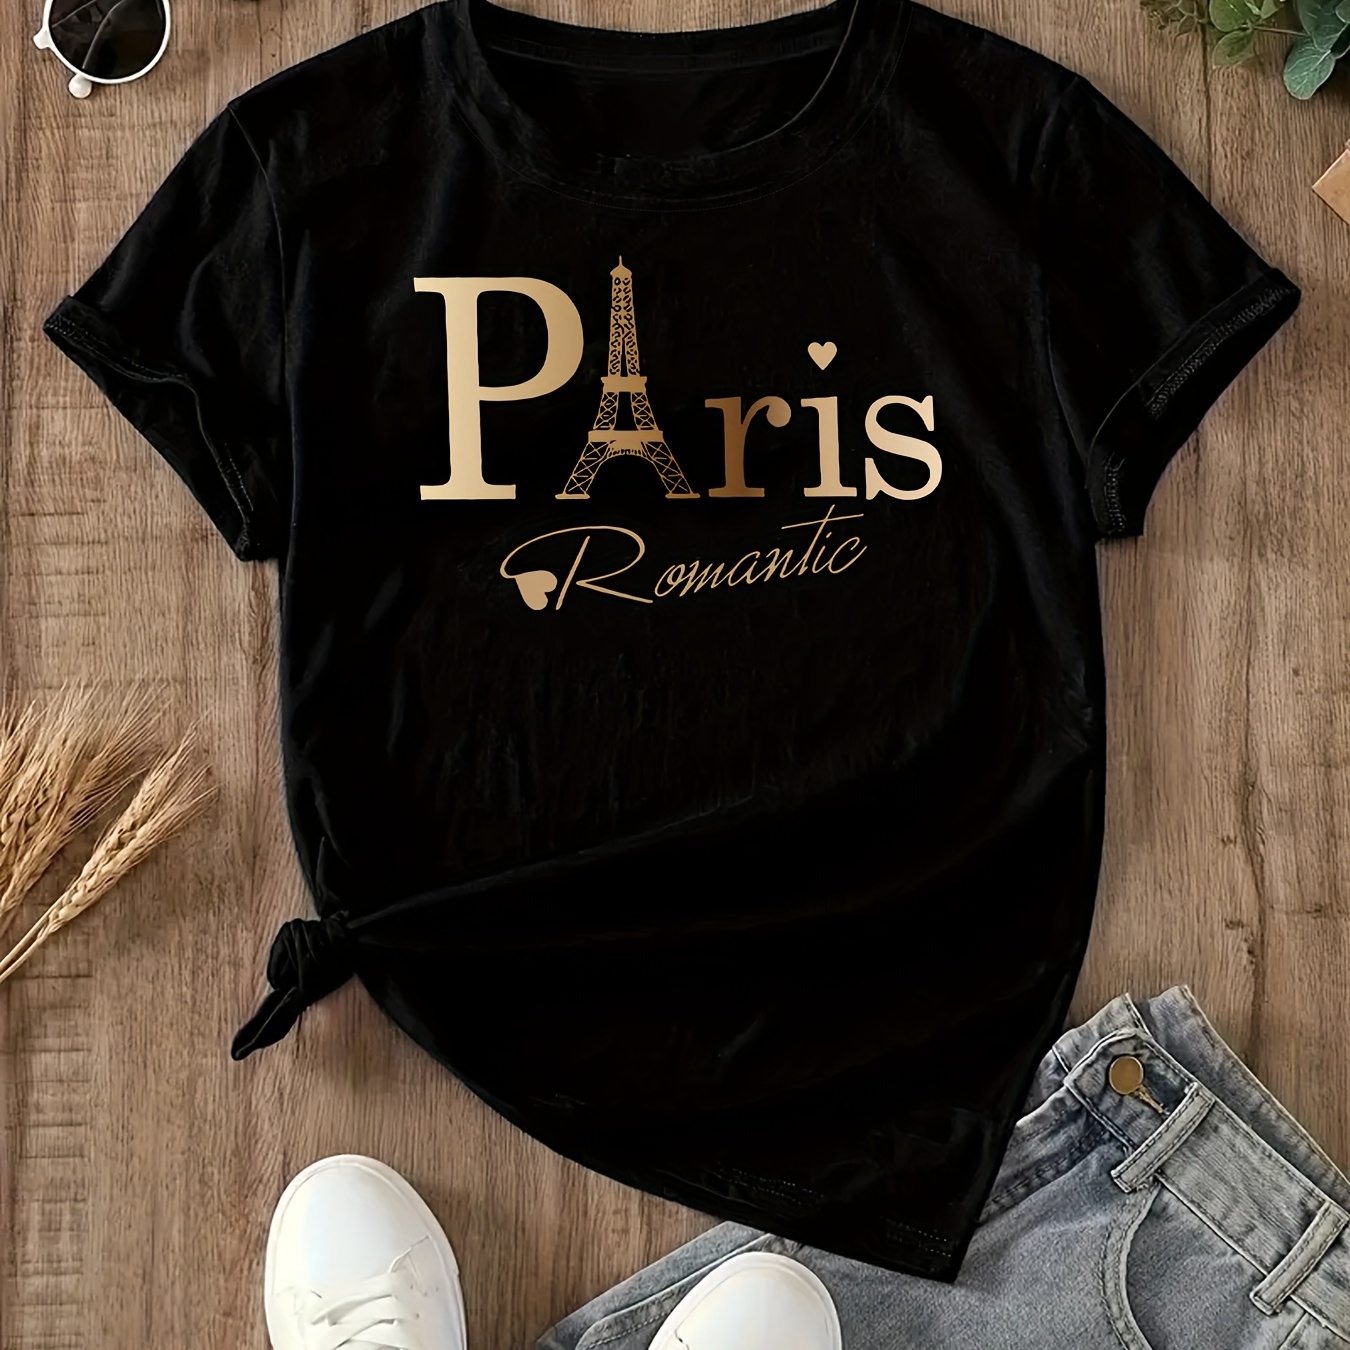 

Plus Size Paris Print T-shirt, Casual Crew Neck Short Sleeve Top For Spring & Summer, Women's Plus Size Clothing